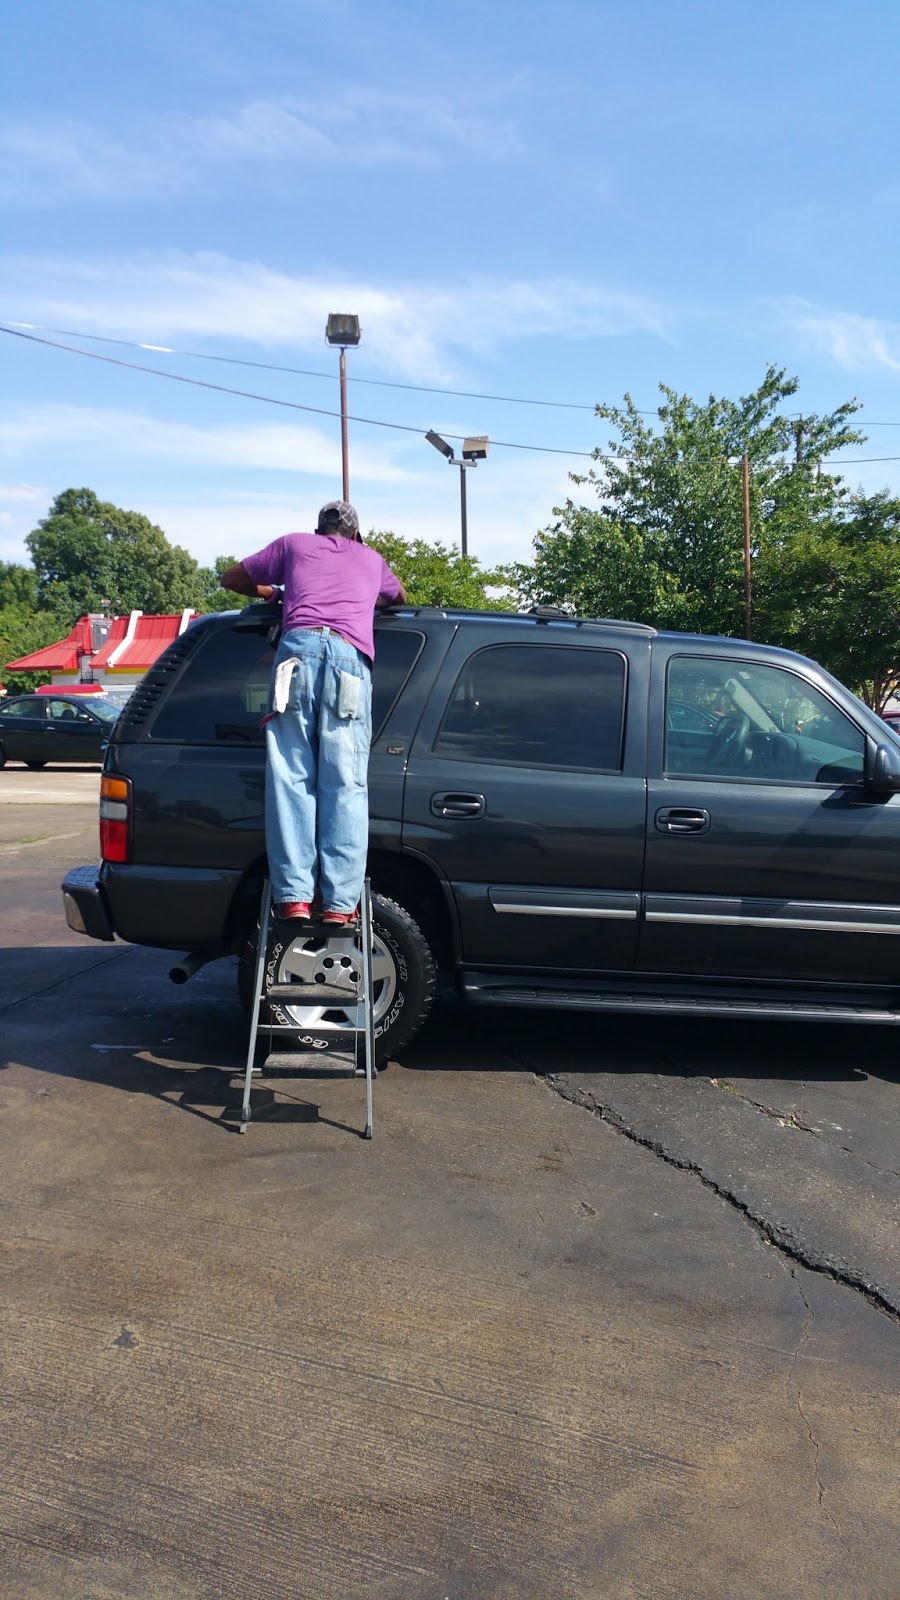 Freetown Style Hand Car Wash | 2343 Randleman Rd, Greensboro, NC 27406 | Phone: (336) 303-9588